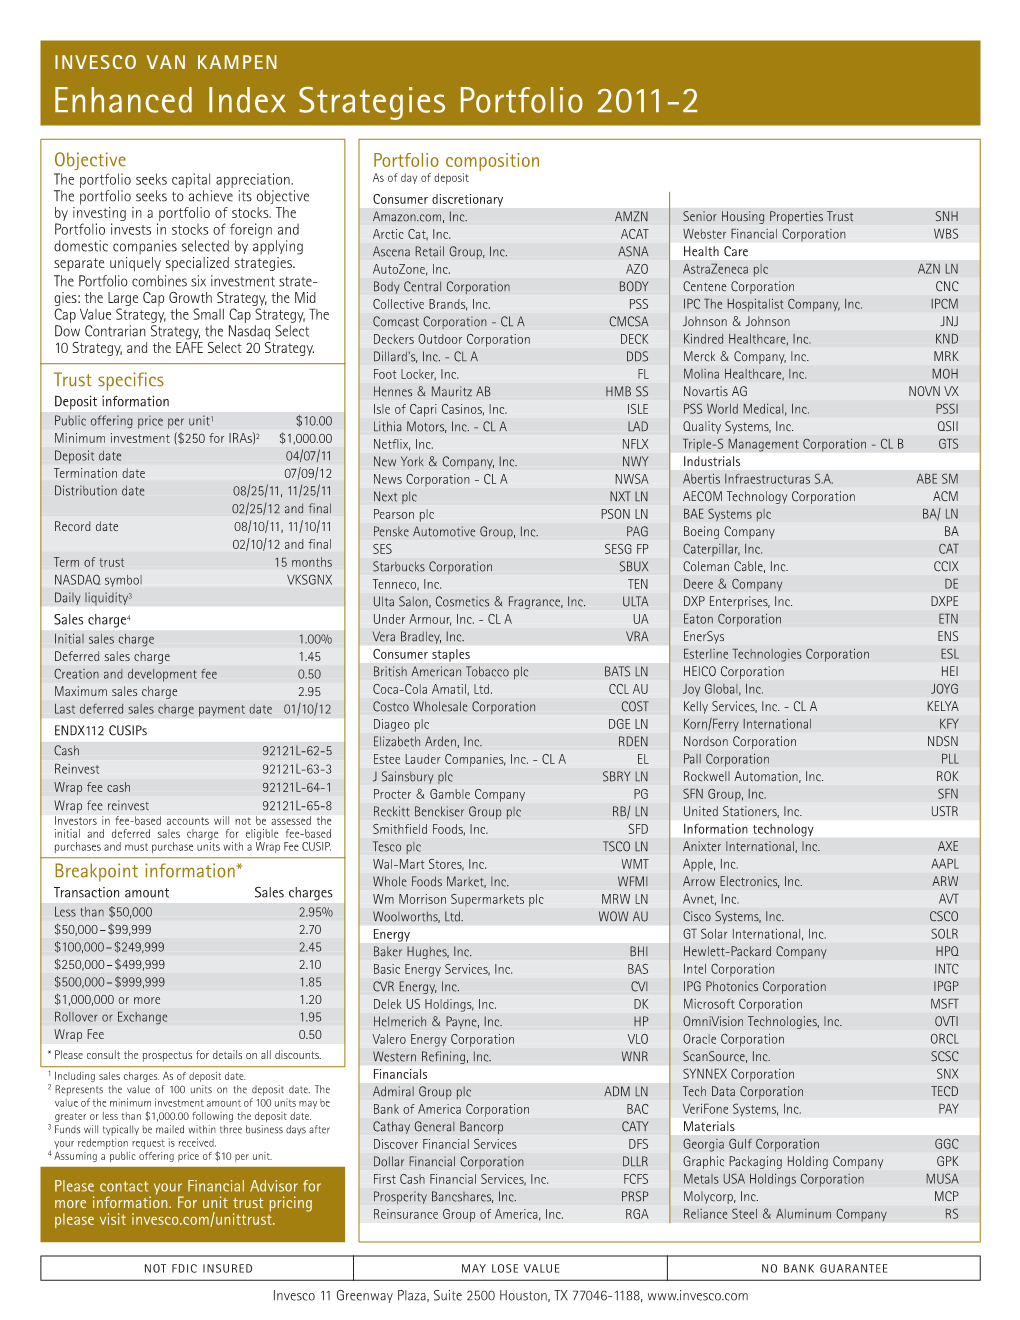 Enhanced Index Strategies Portfolio 2011-2 Fact Card (PDF)